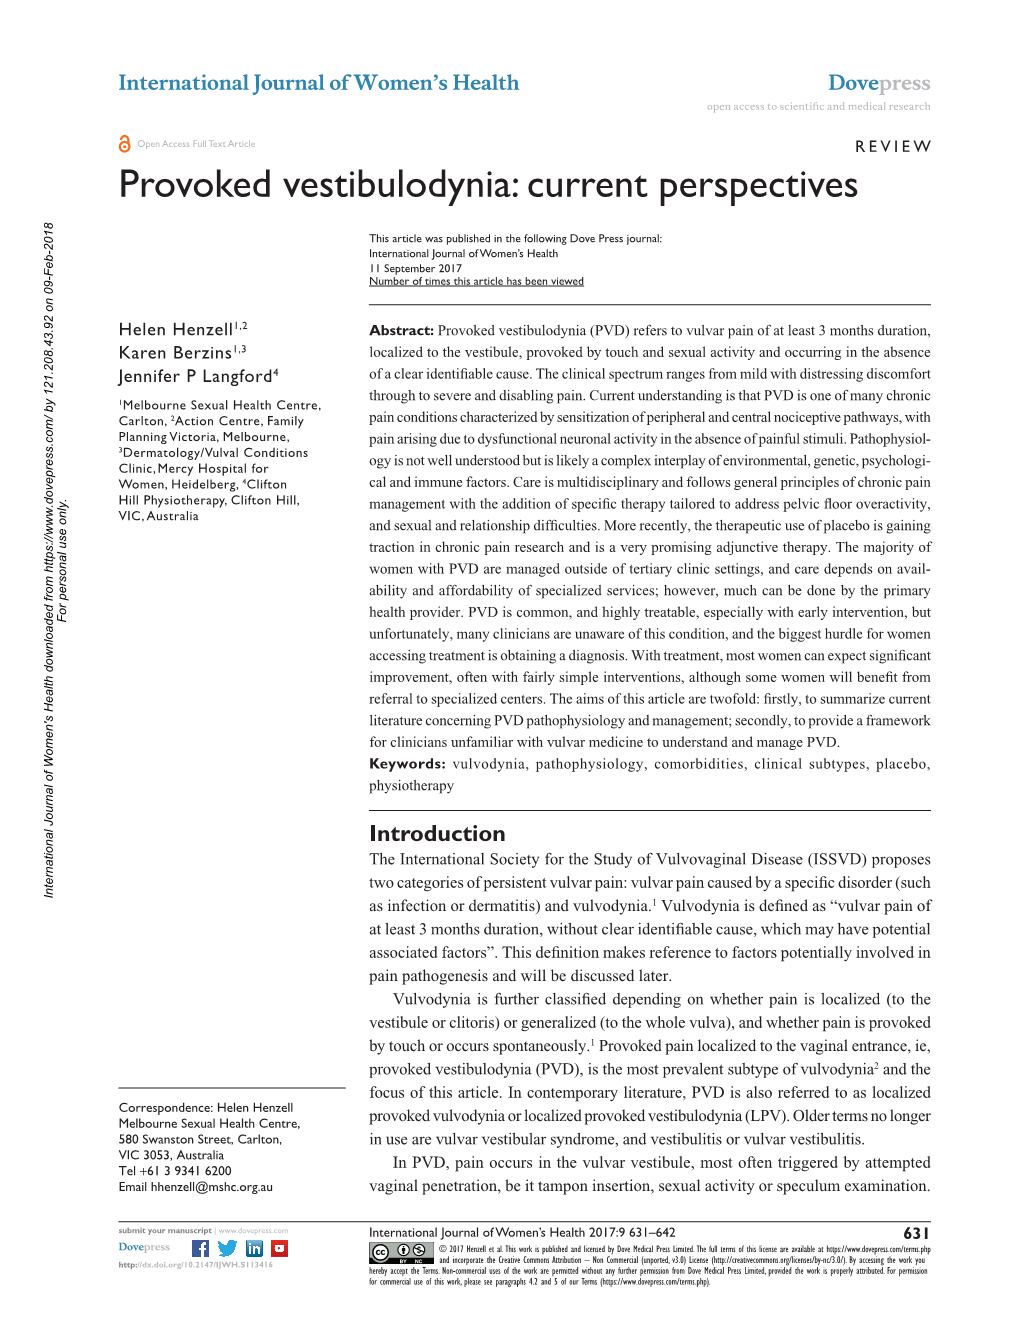 Provoked Vestibulodynia: Current Perspectives